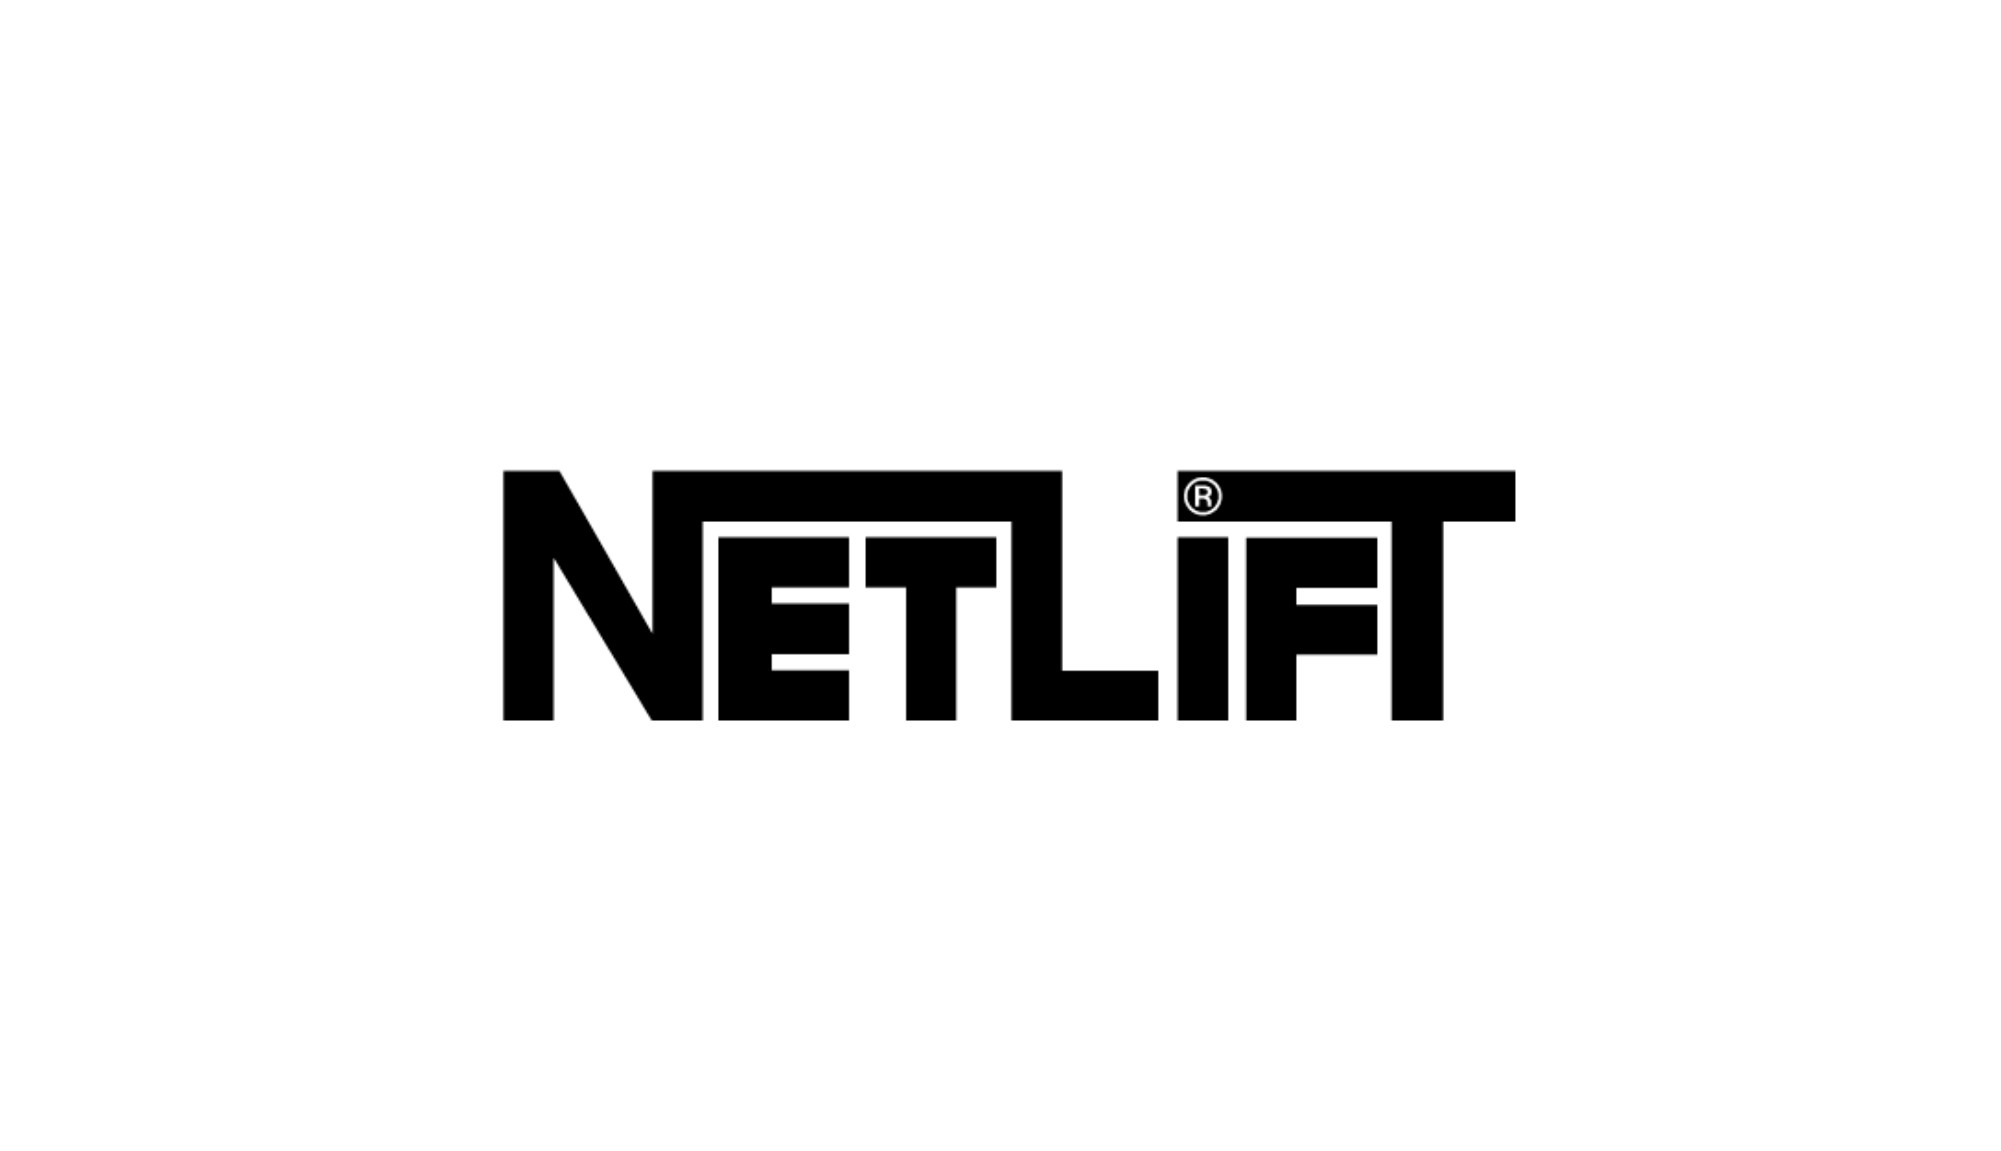 NETLFT